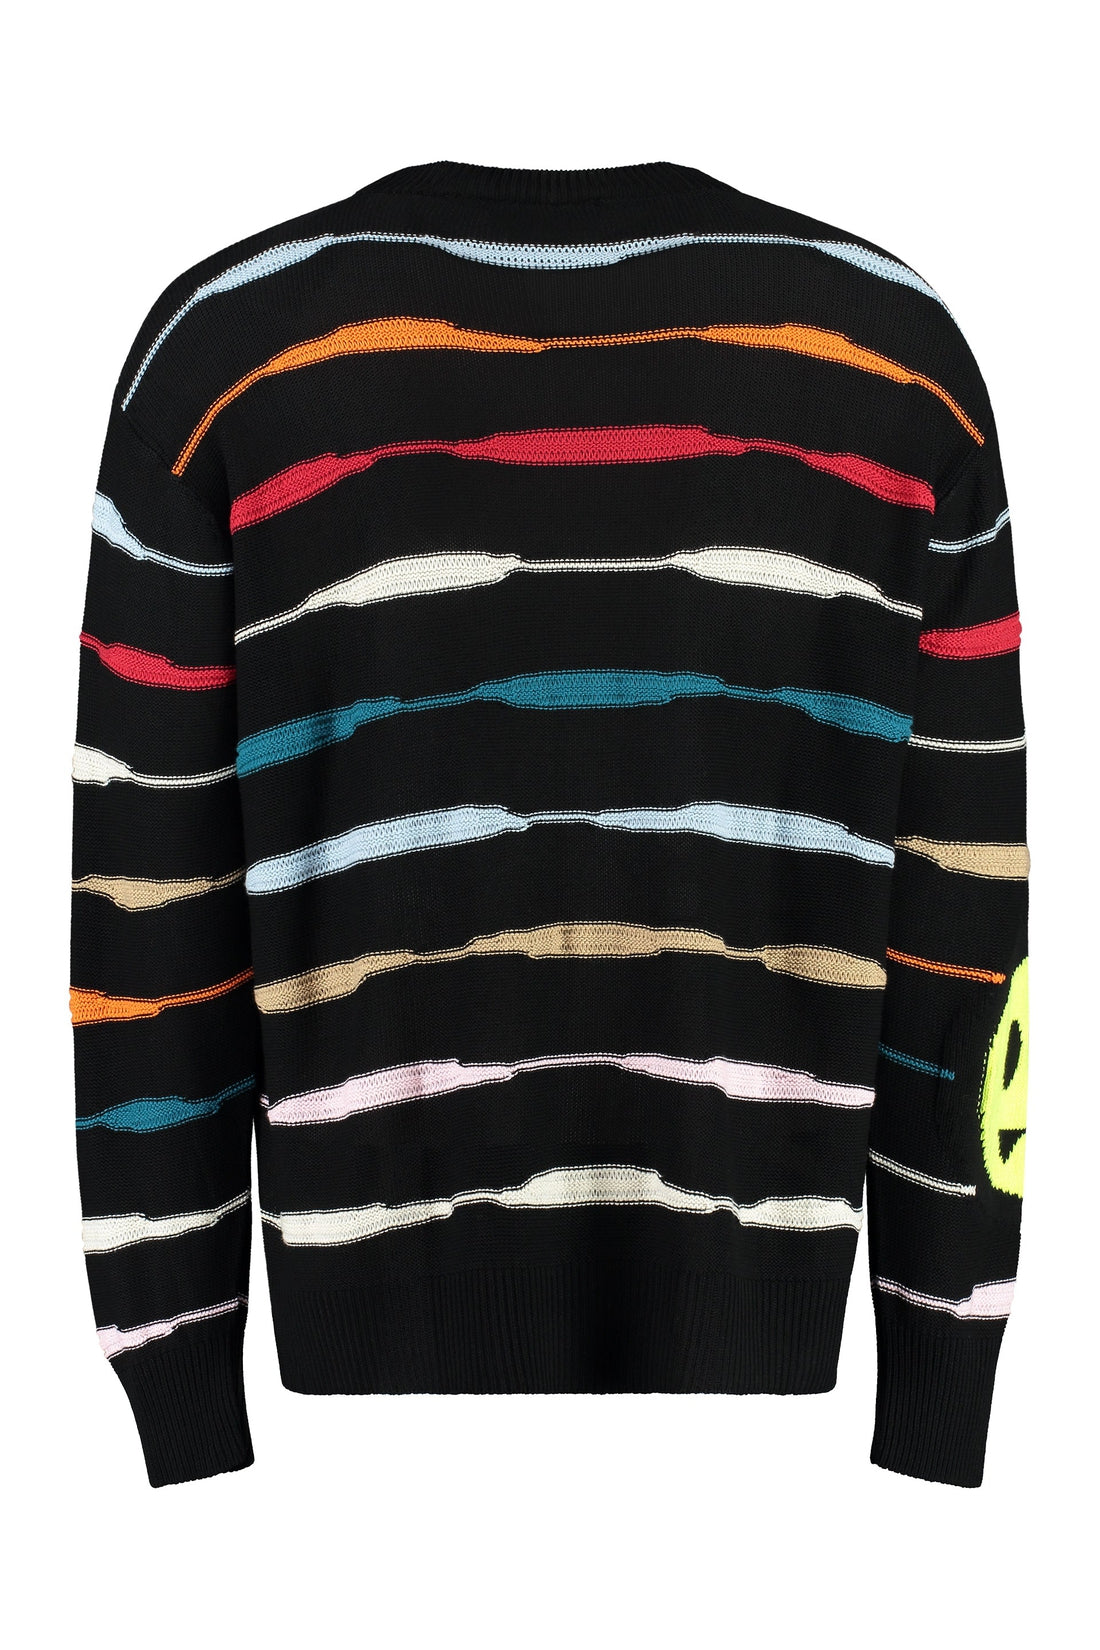 Barrow-OUTLET-SALE-Striped crew-neck sweater-ARCHIVIST